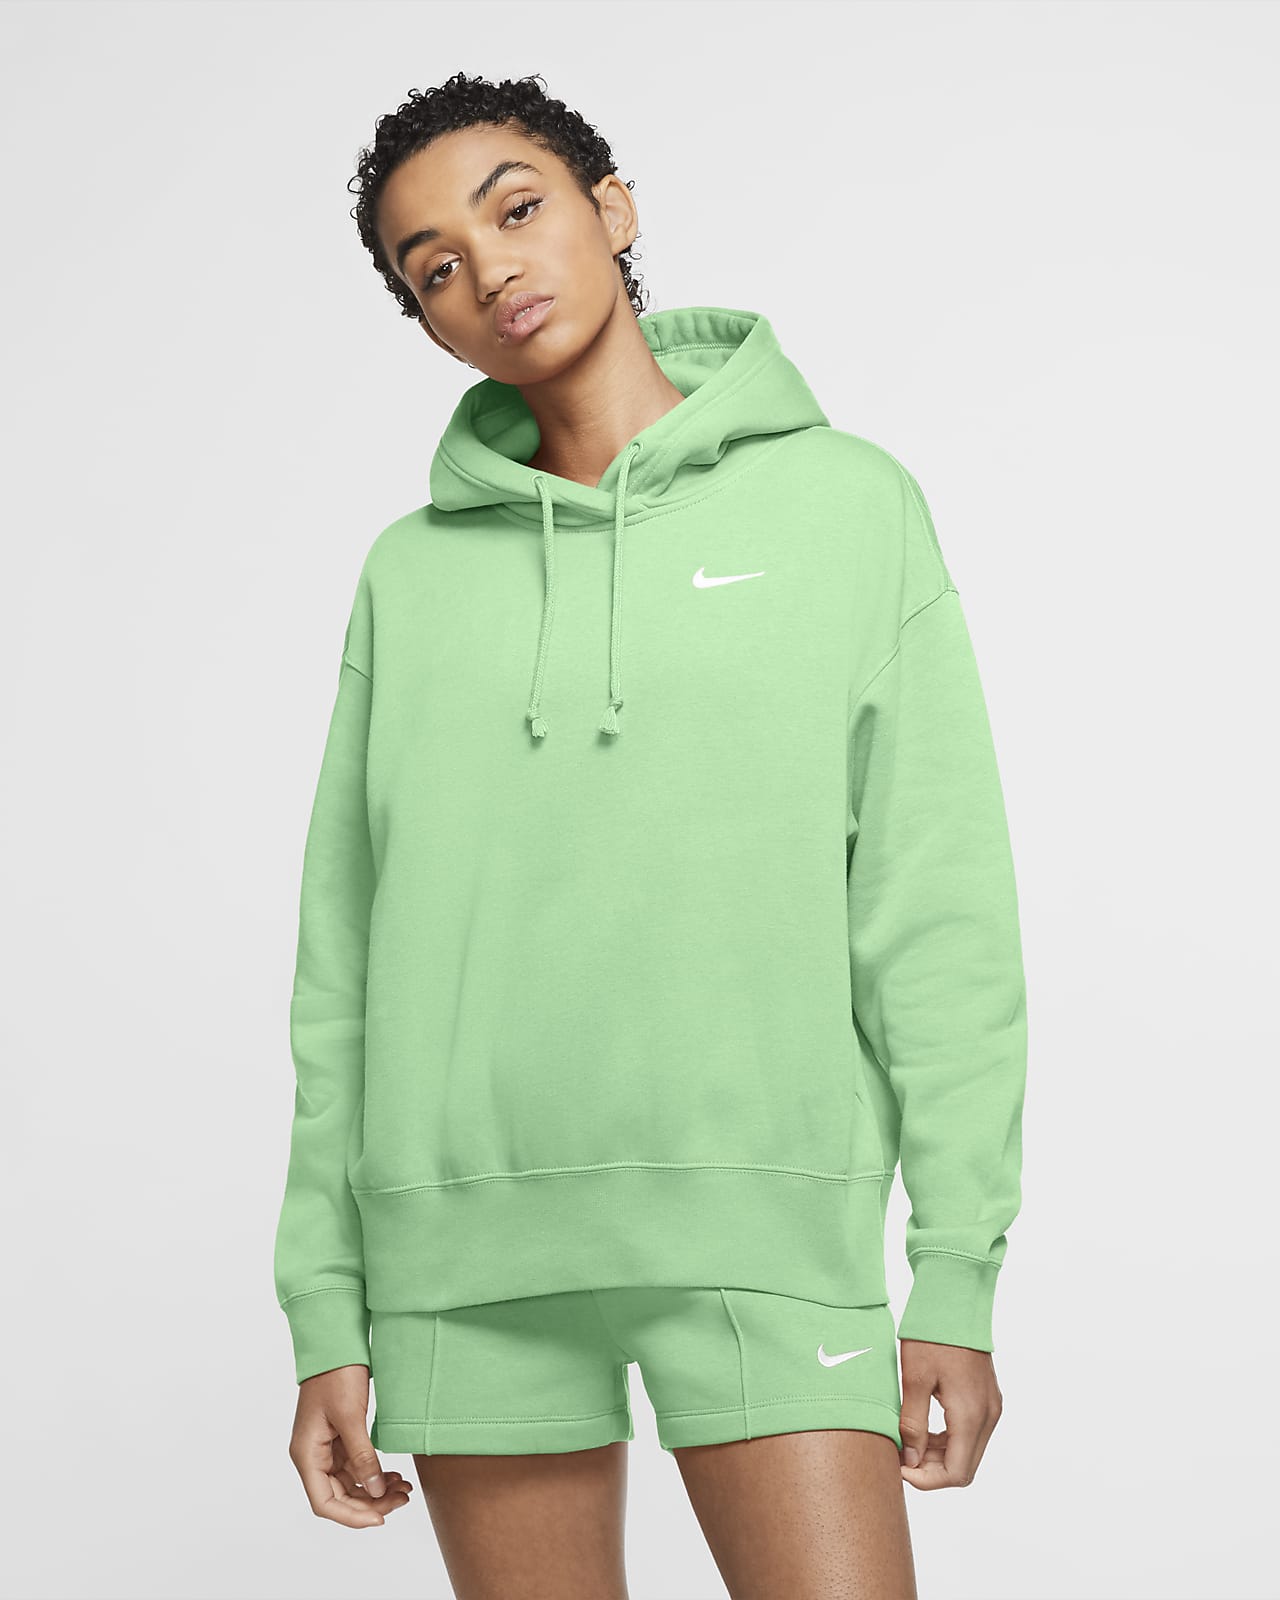 color changing nike hoodie